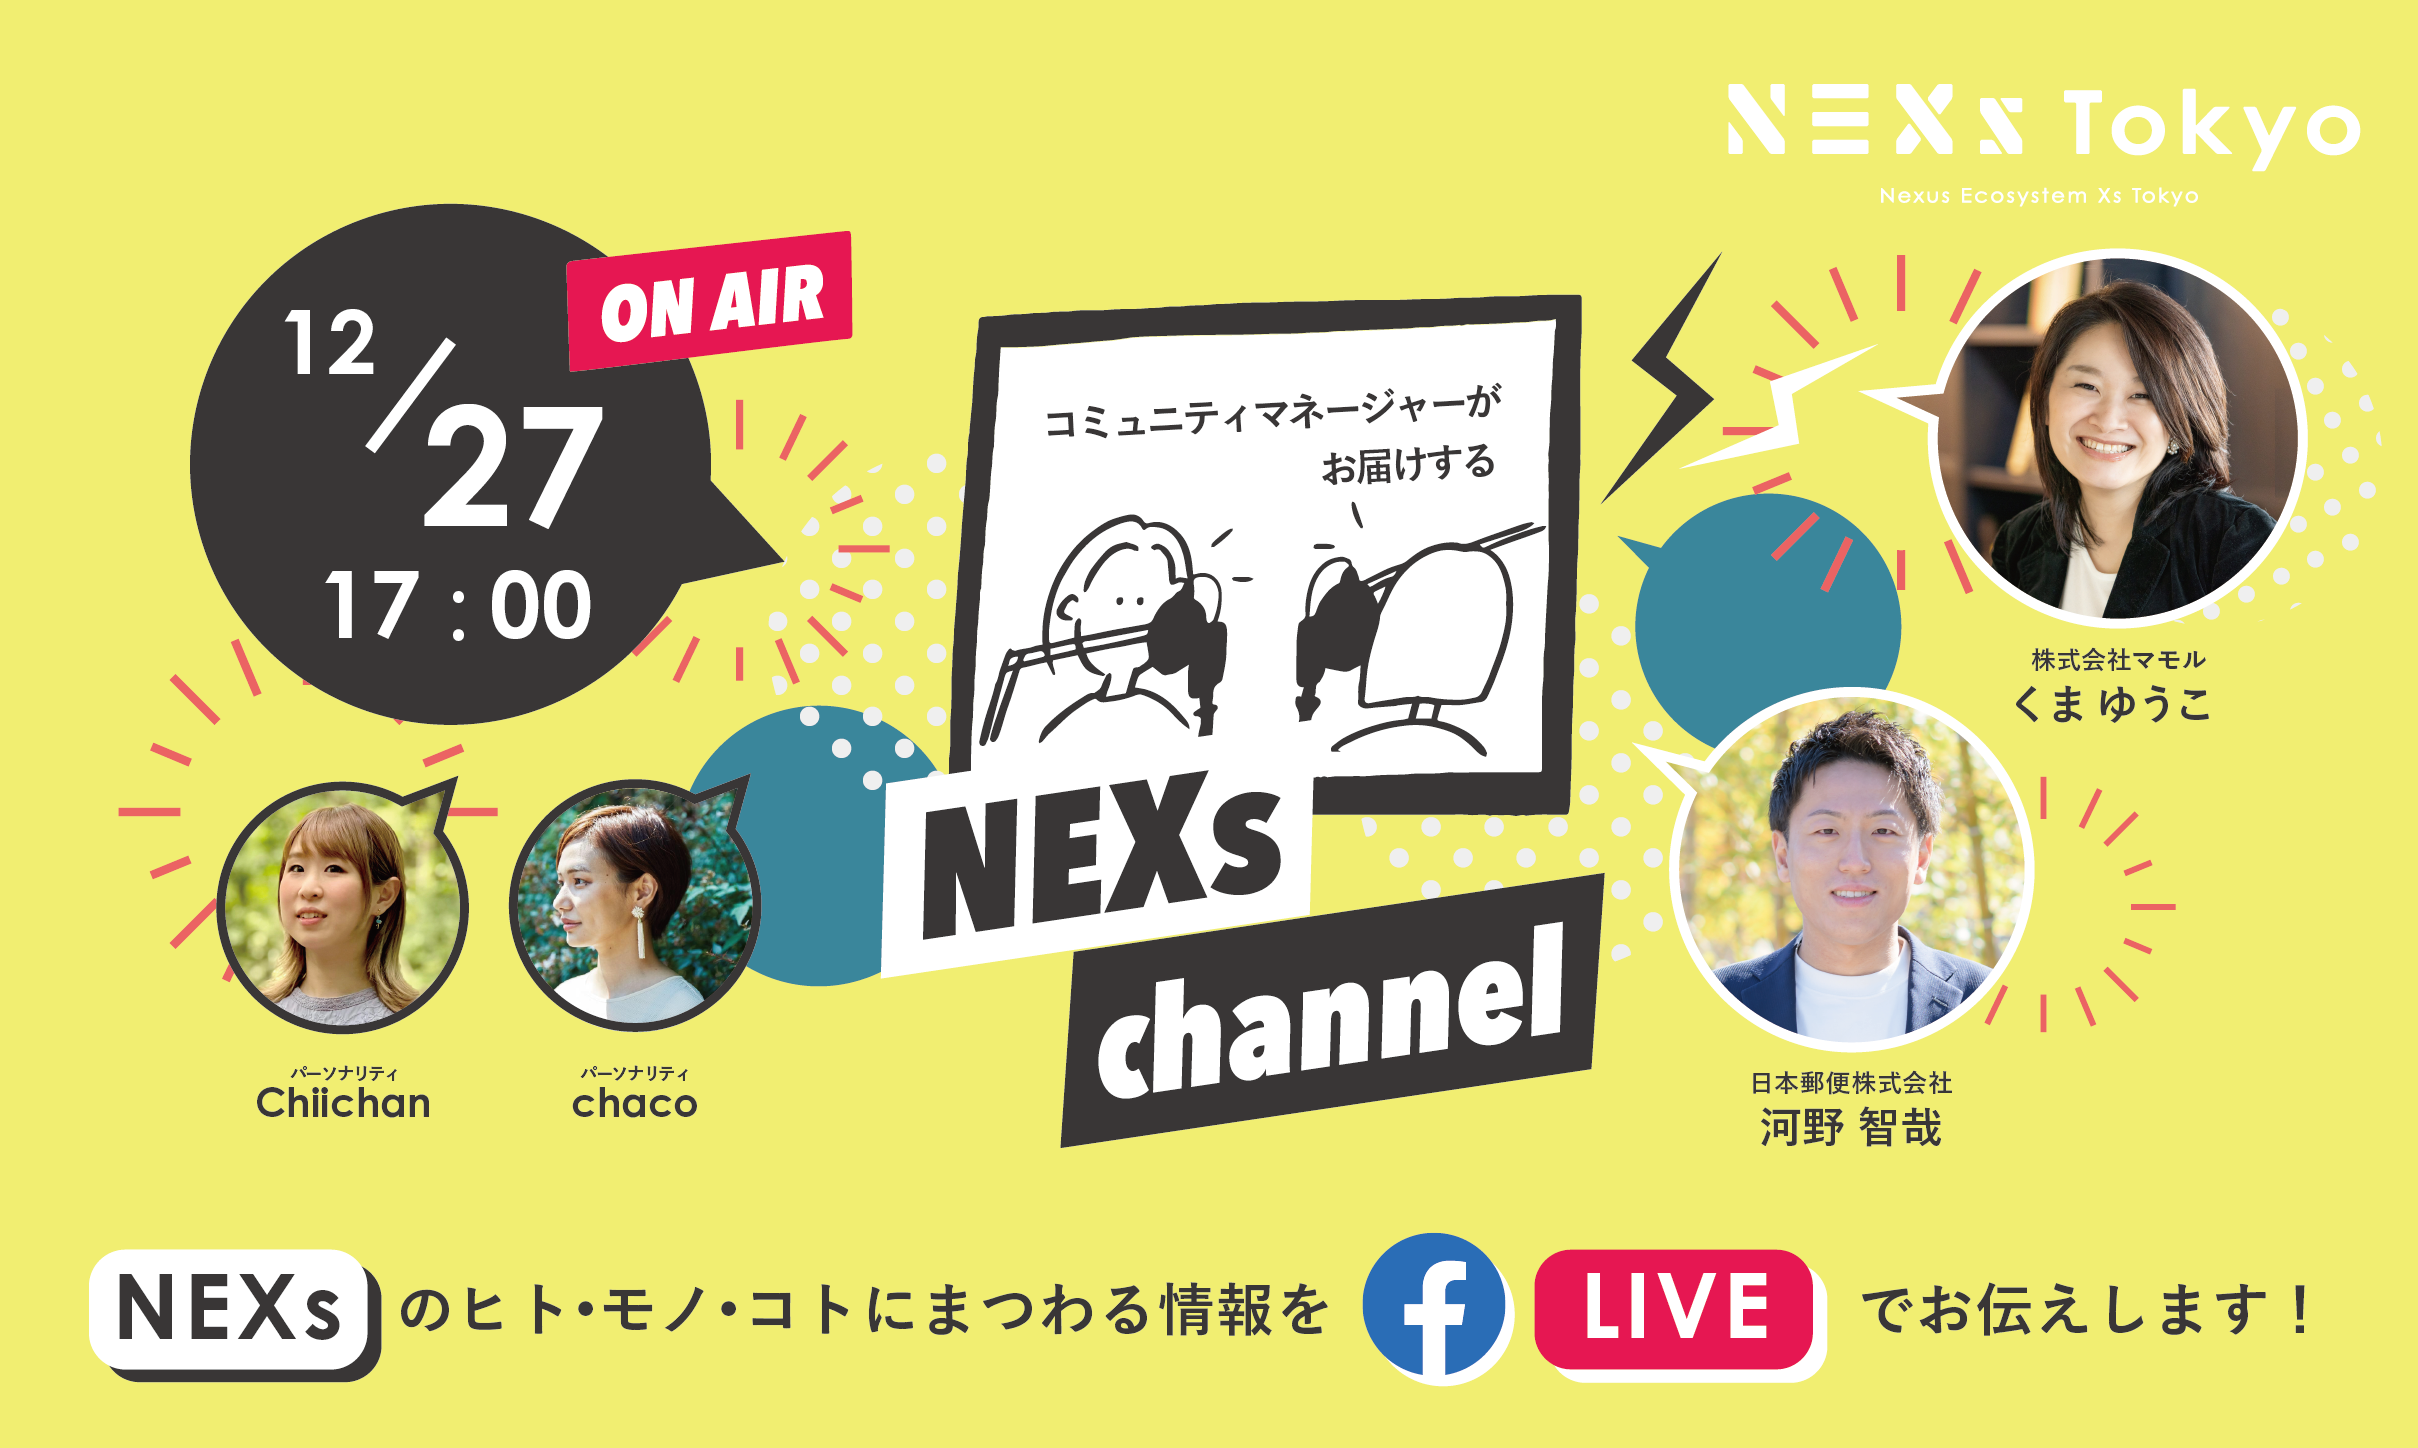 NEXs channel #24 -NEXs Tokyoのヒト・モノ・コトを特設ラジオブースから生放送でお届け！-